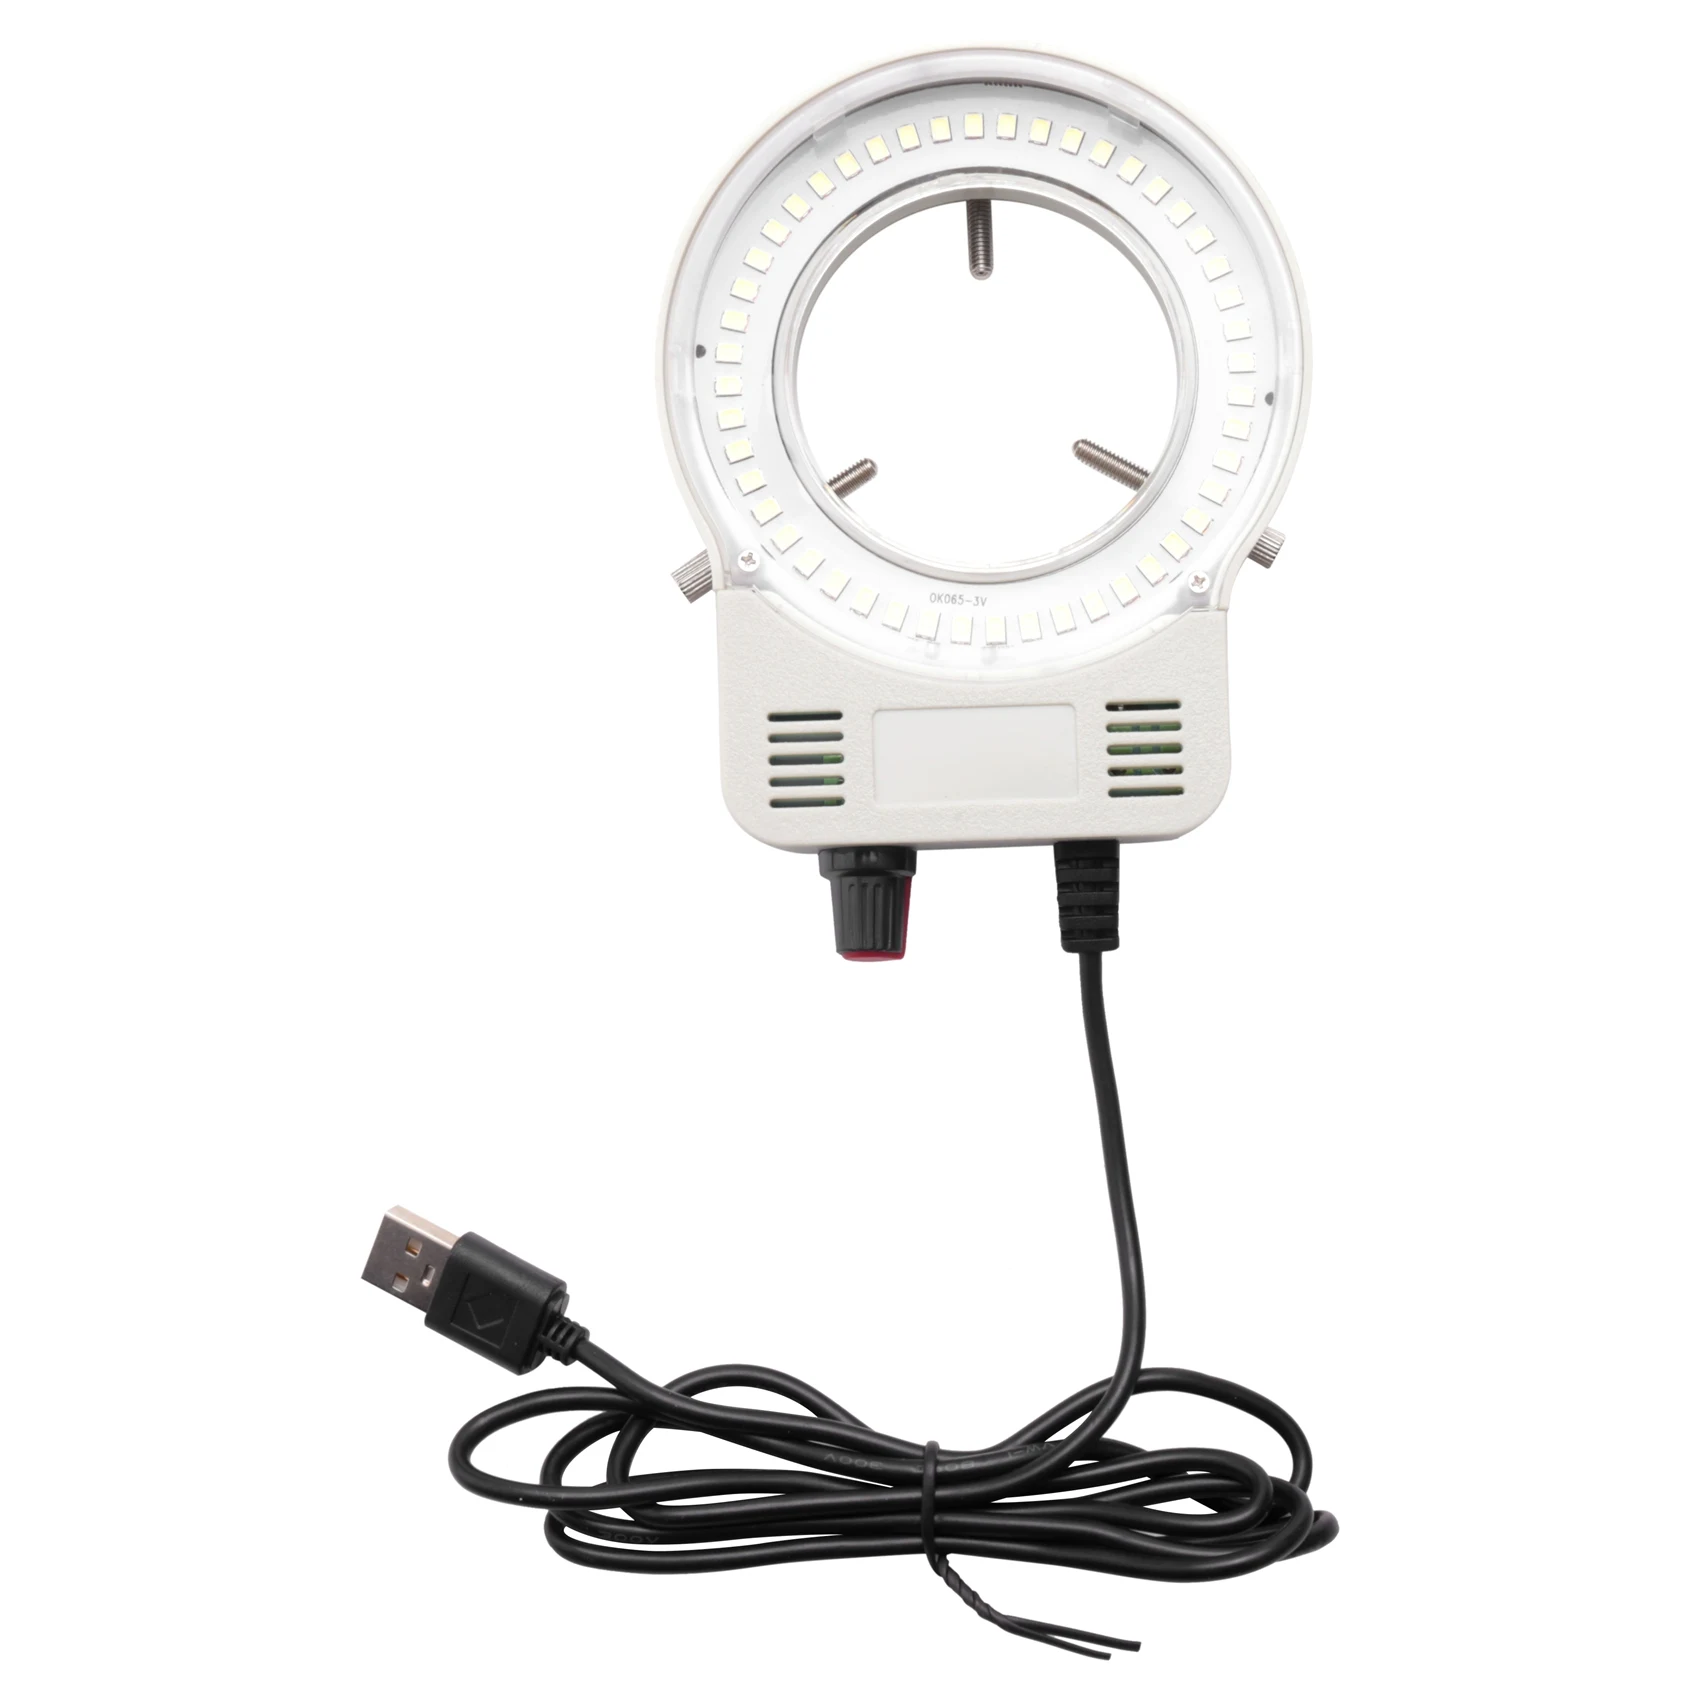 

48 LED Industrial Microscope Camera Light Source Ring Lamp Light Illuminator Lamp Adjustable Brightness USB Interface